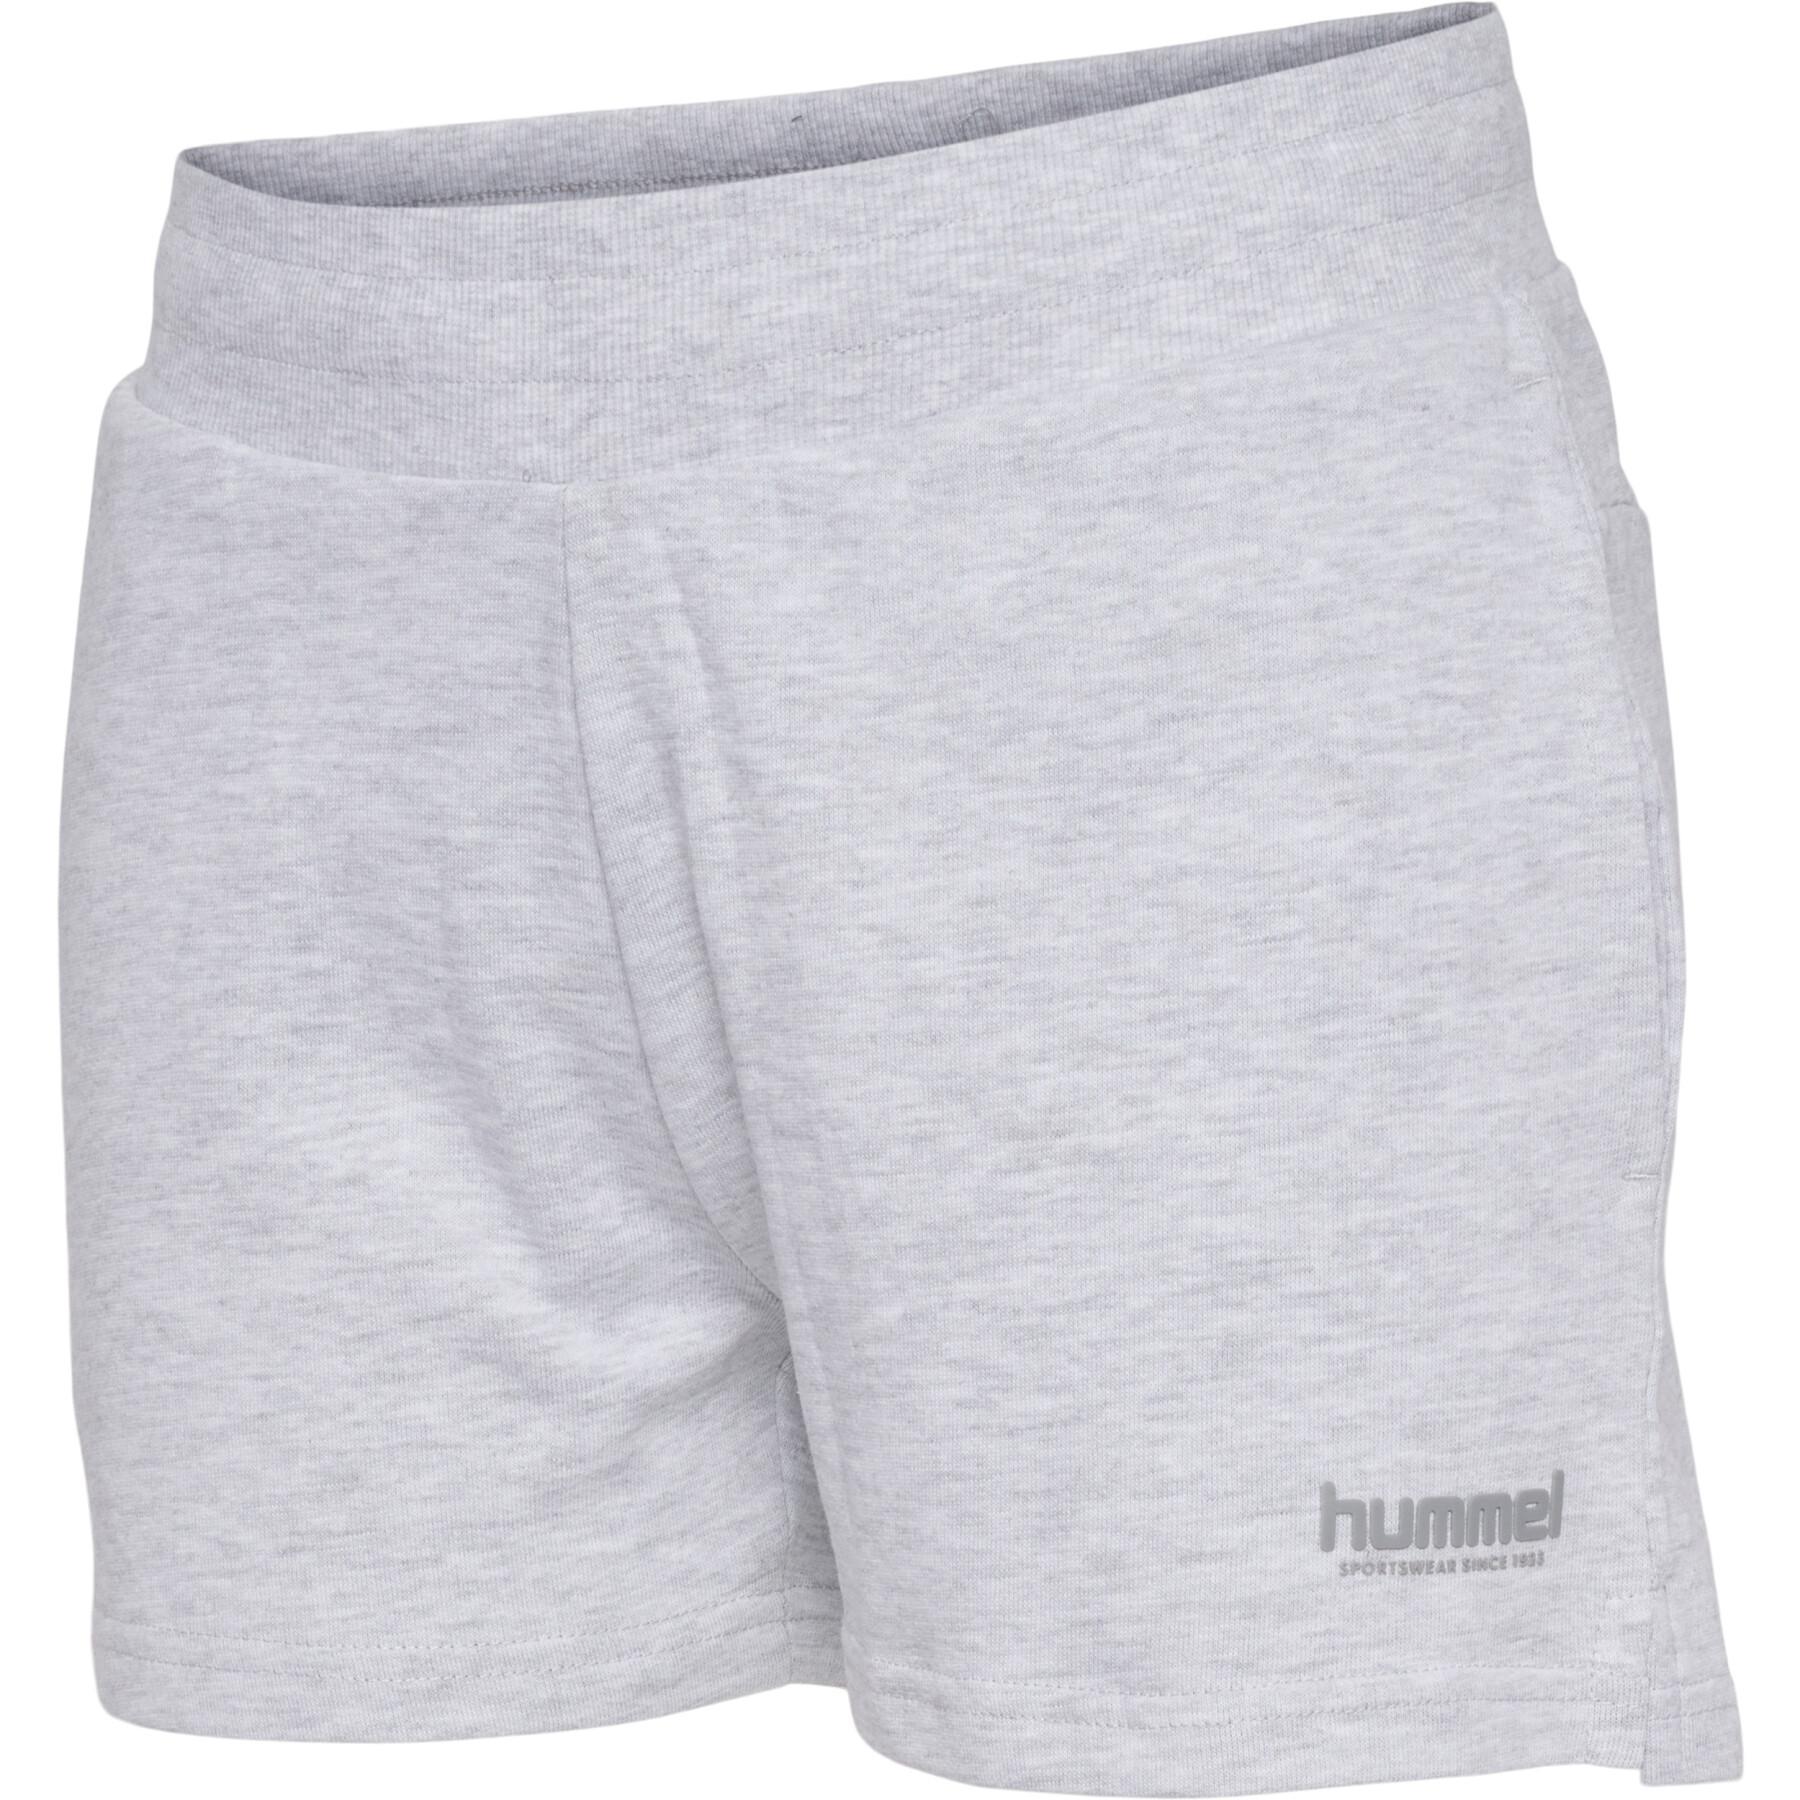 Women's shorts Hummel LGC Senna